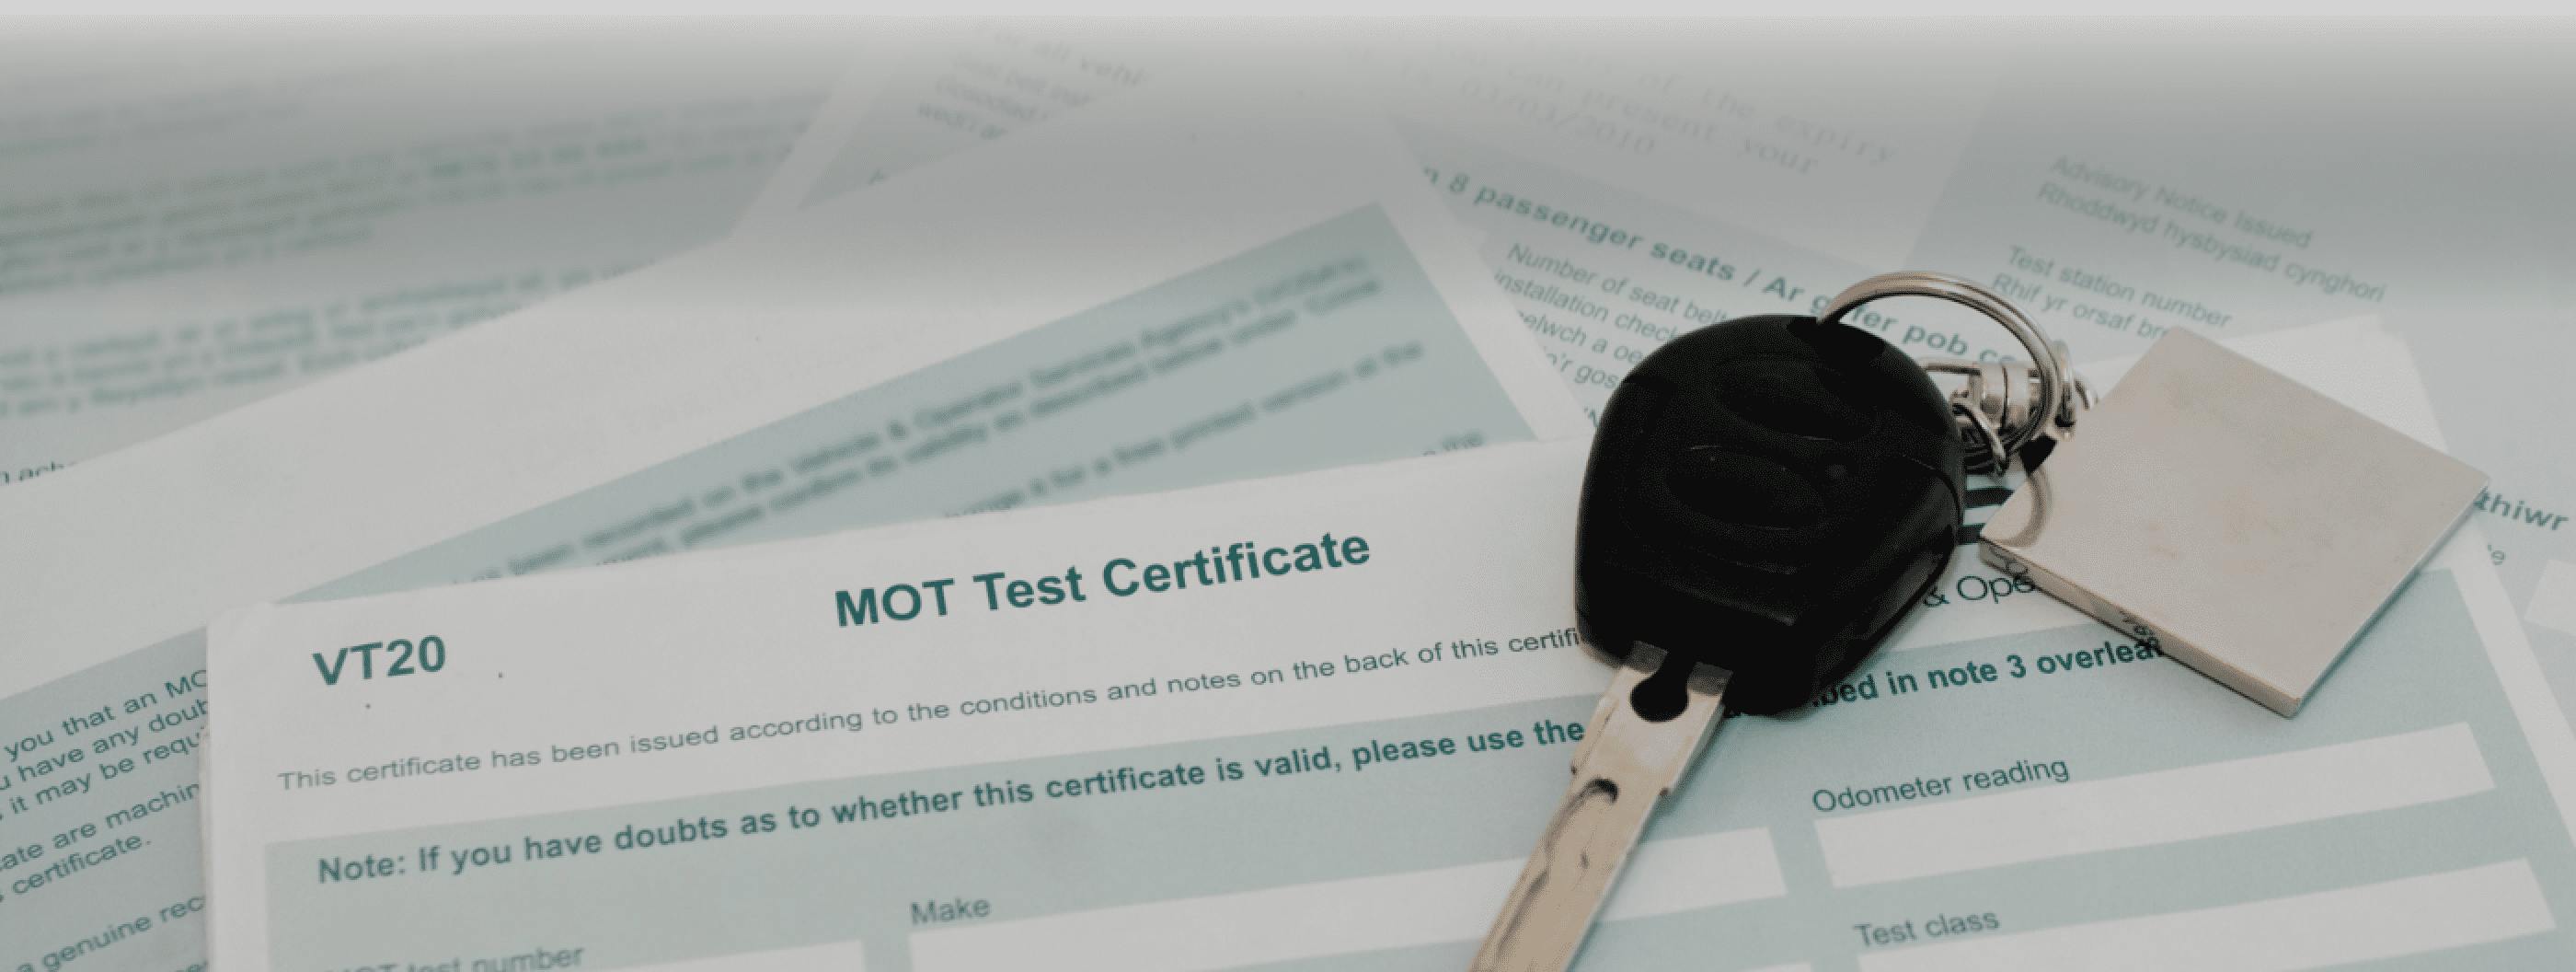 Top of an MOT test certificate with car keys